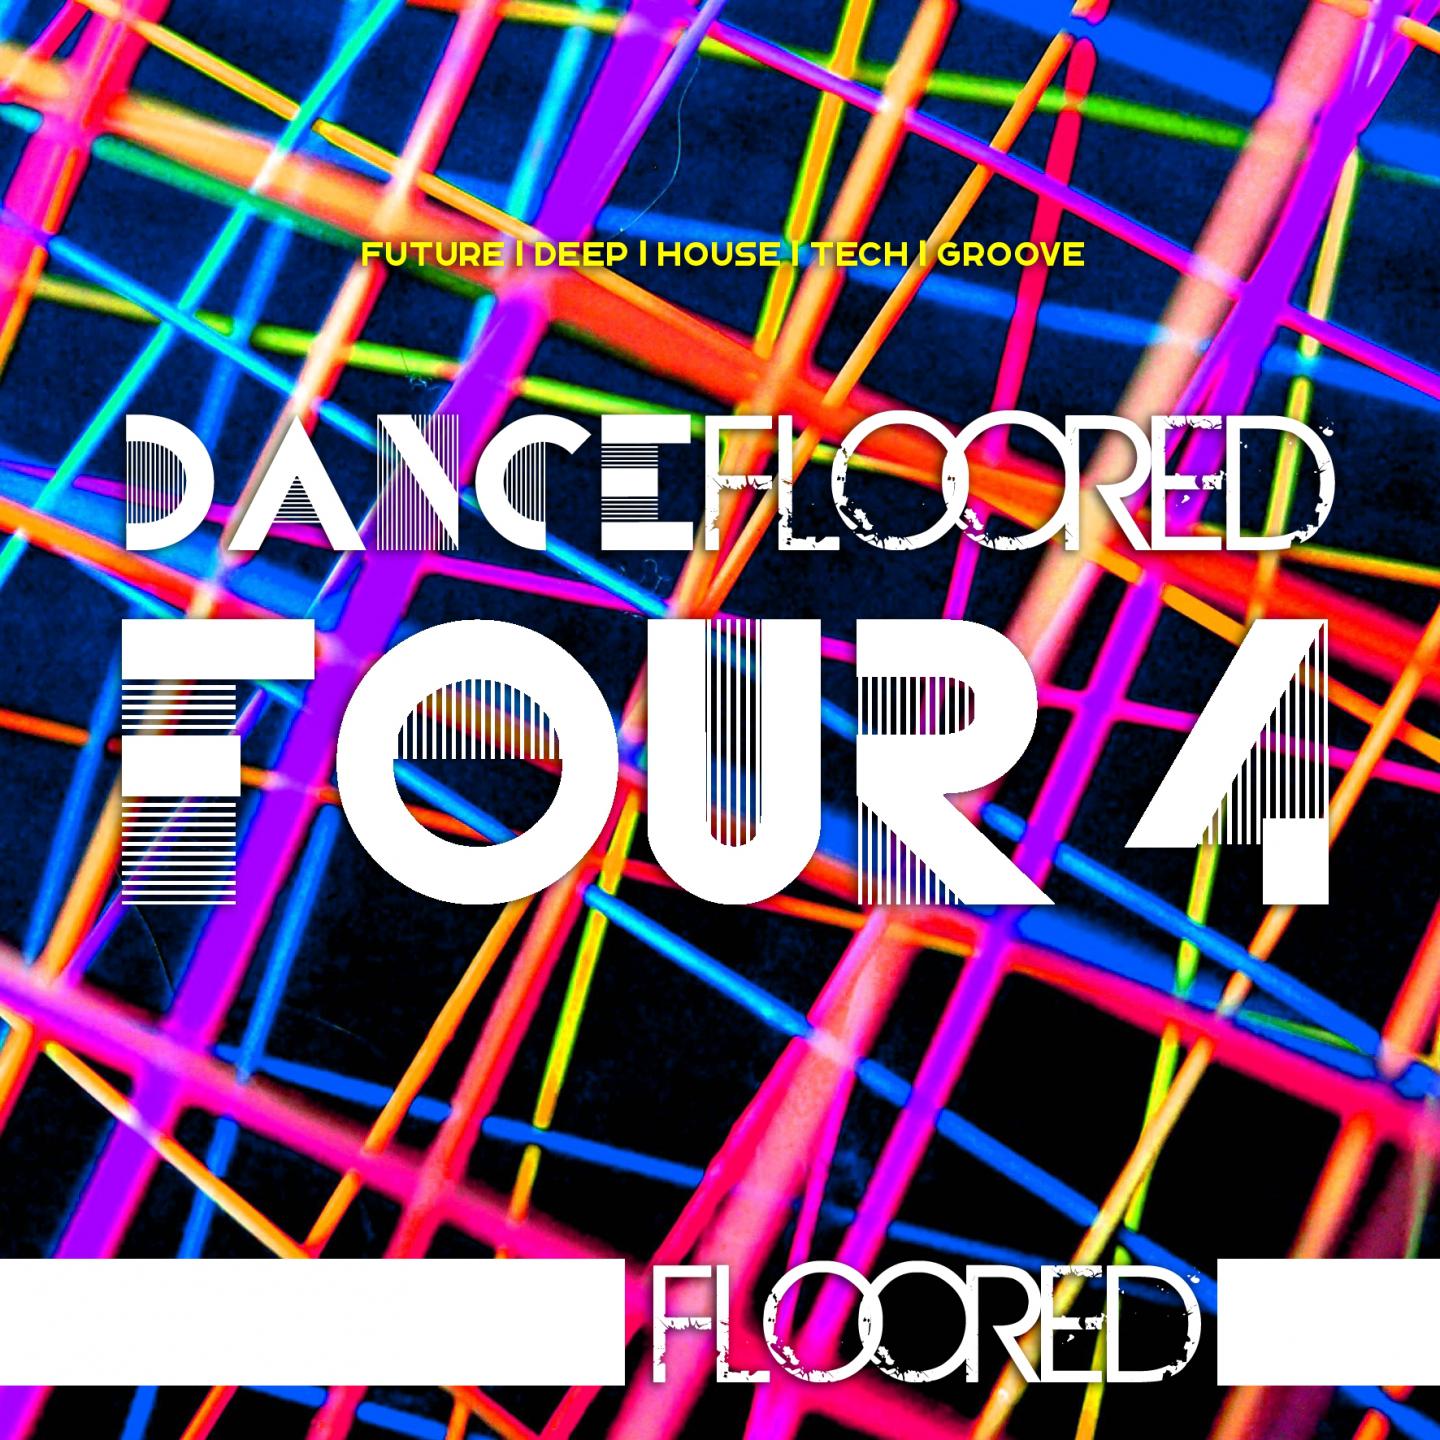 Dancefloored Four4